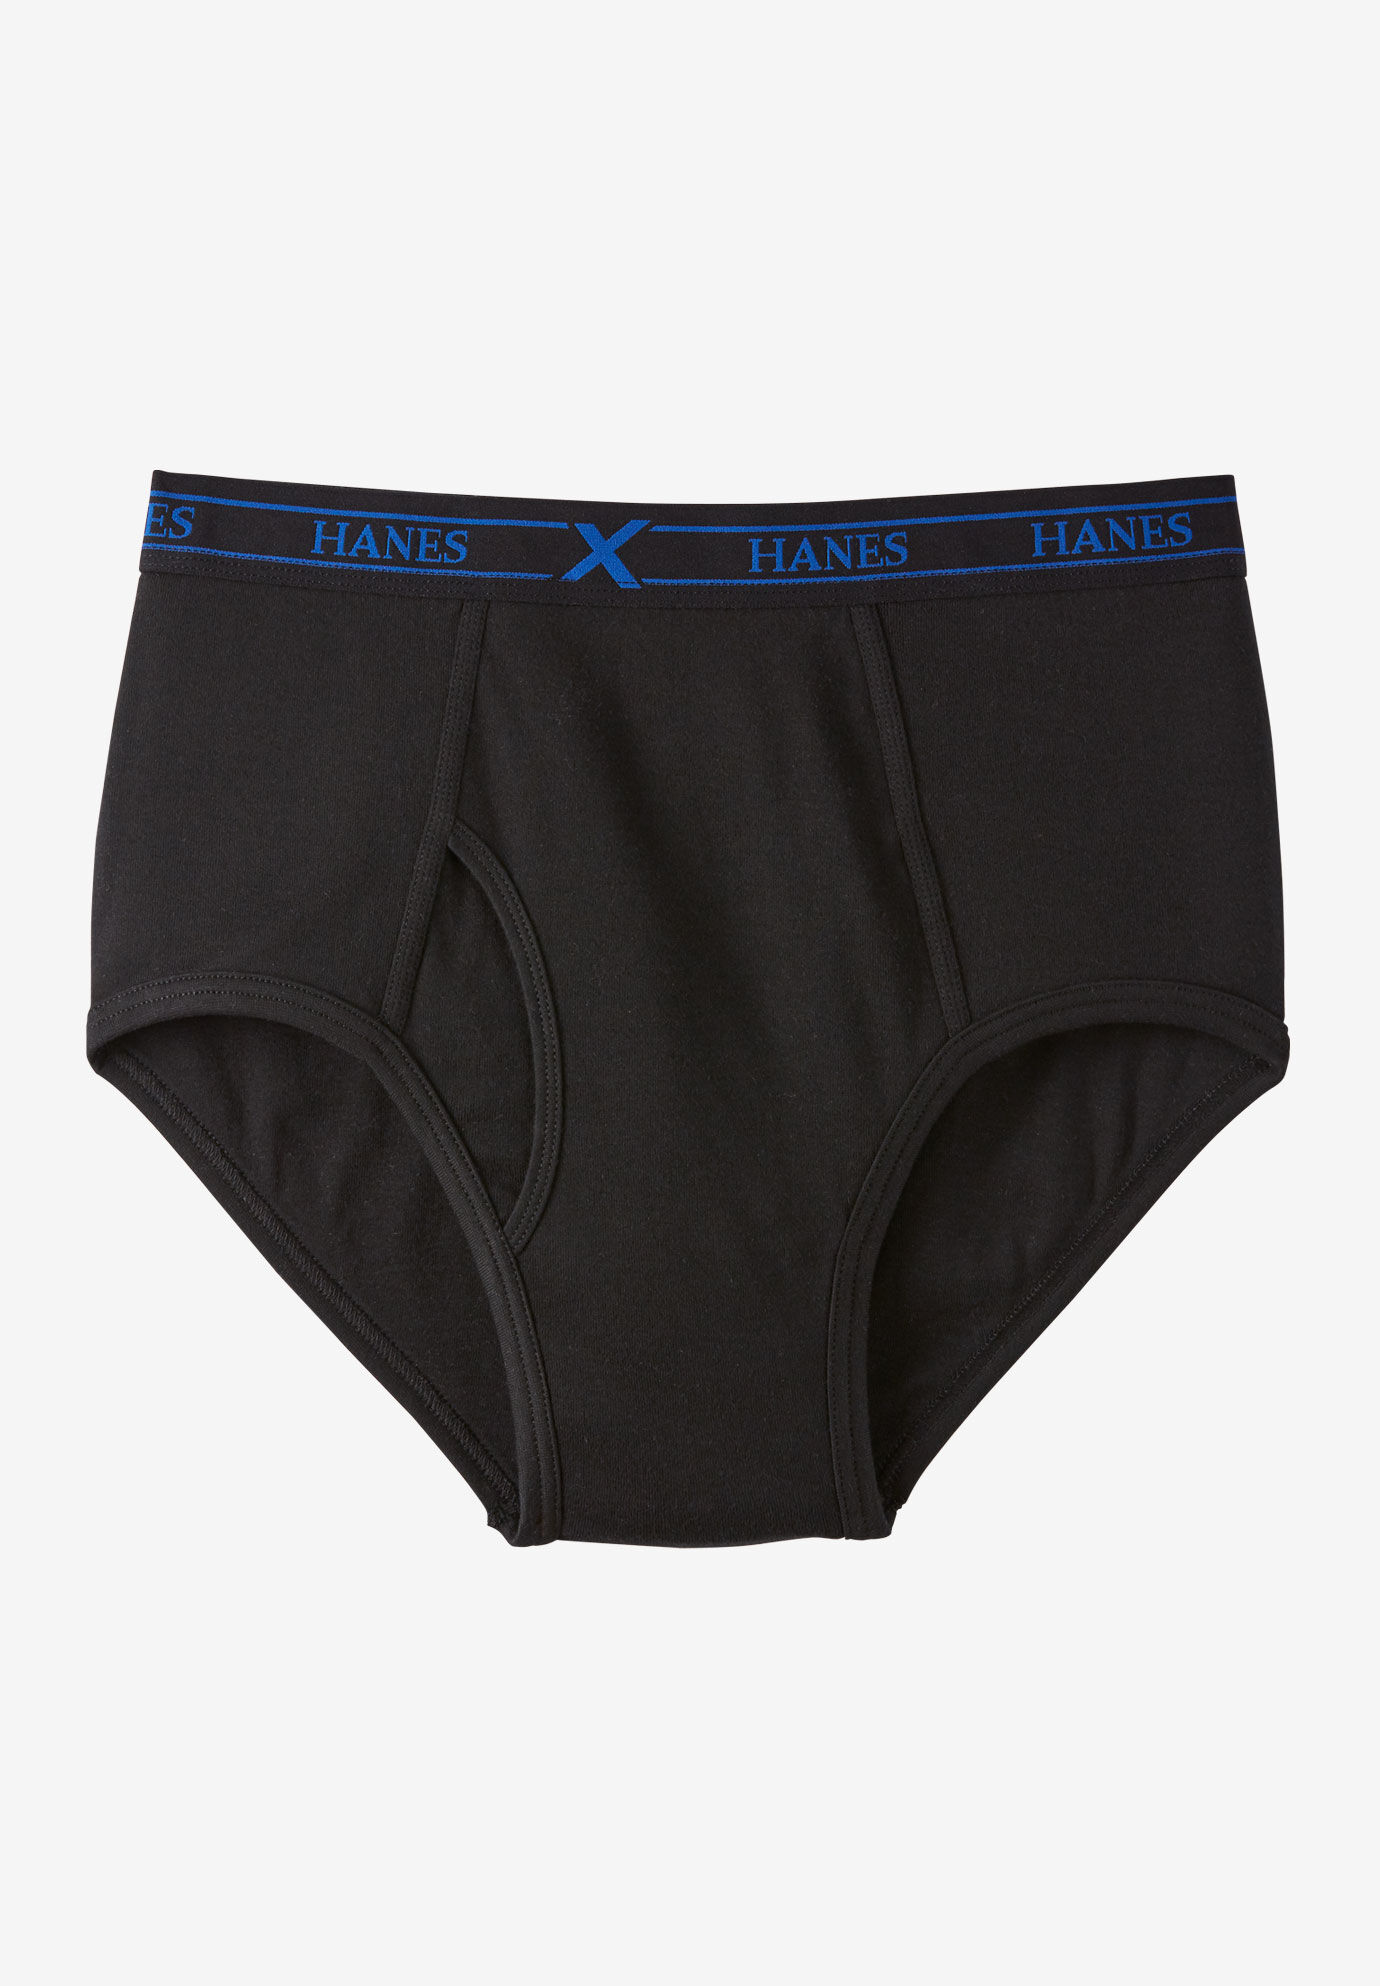 Hanes X-Temp Medium Underwear 3pcs All items are from US Bale